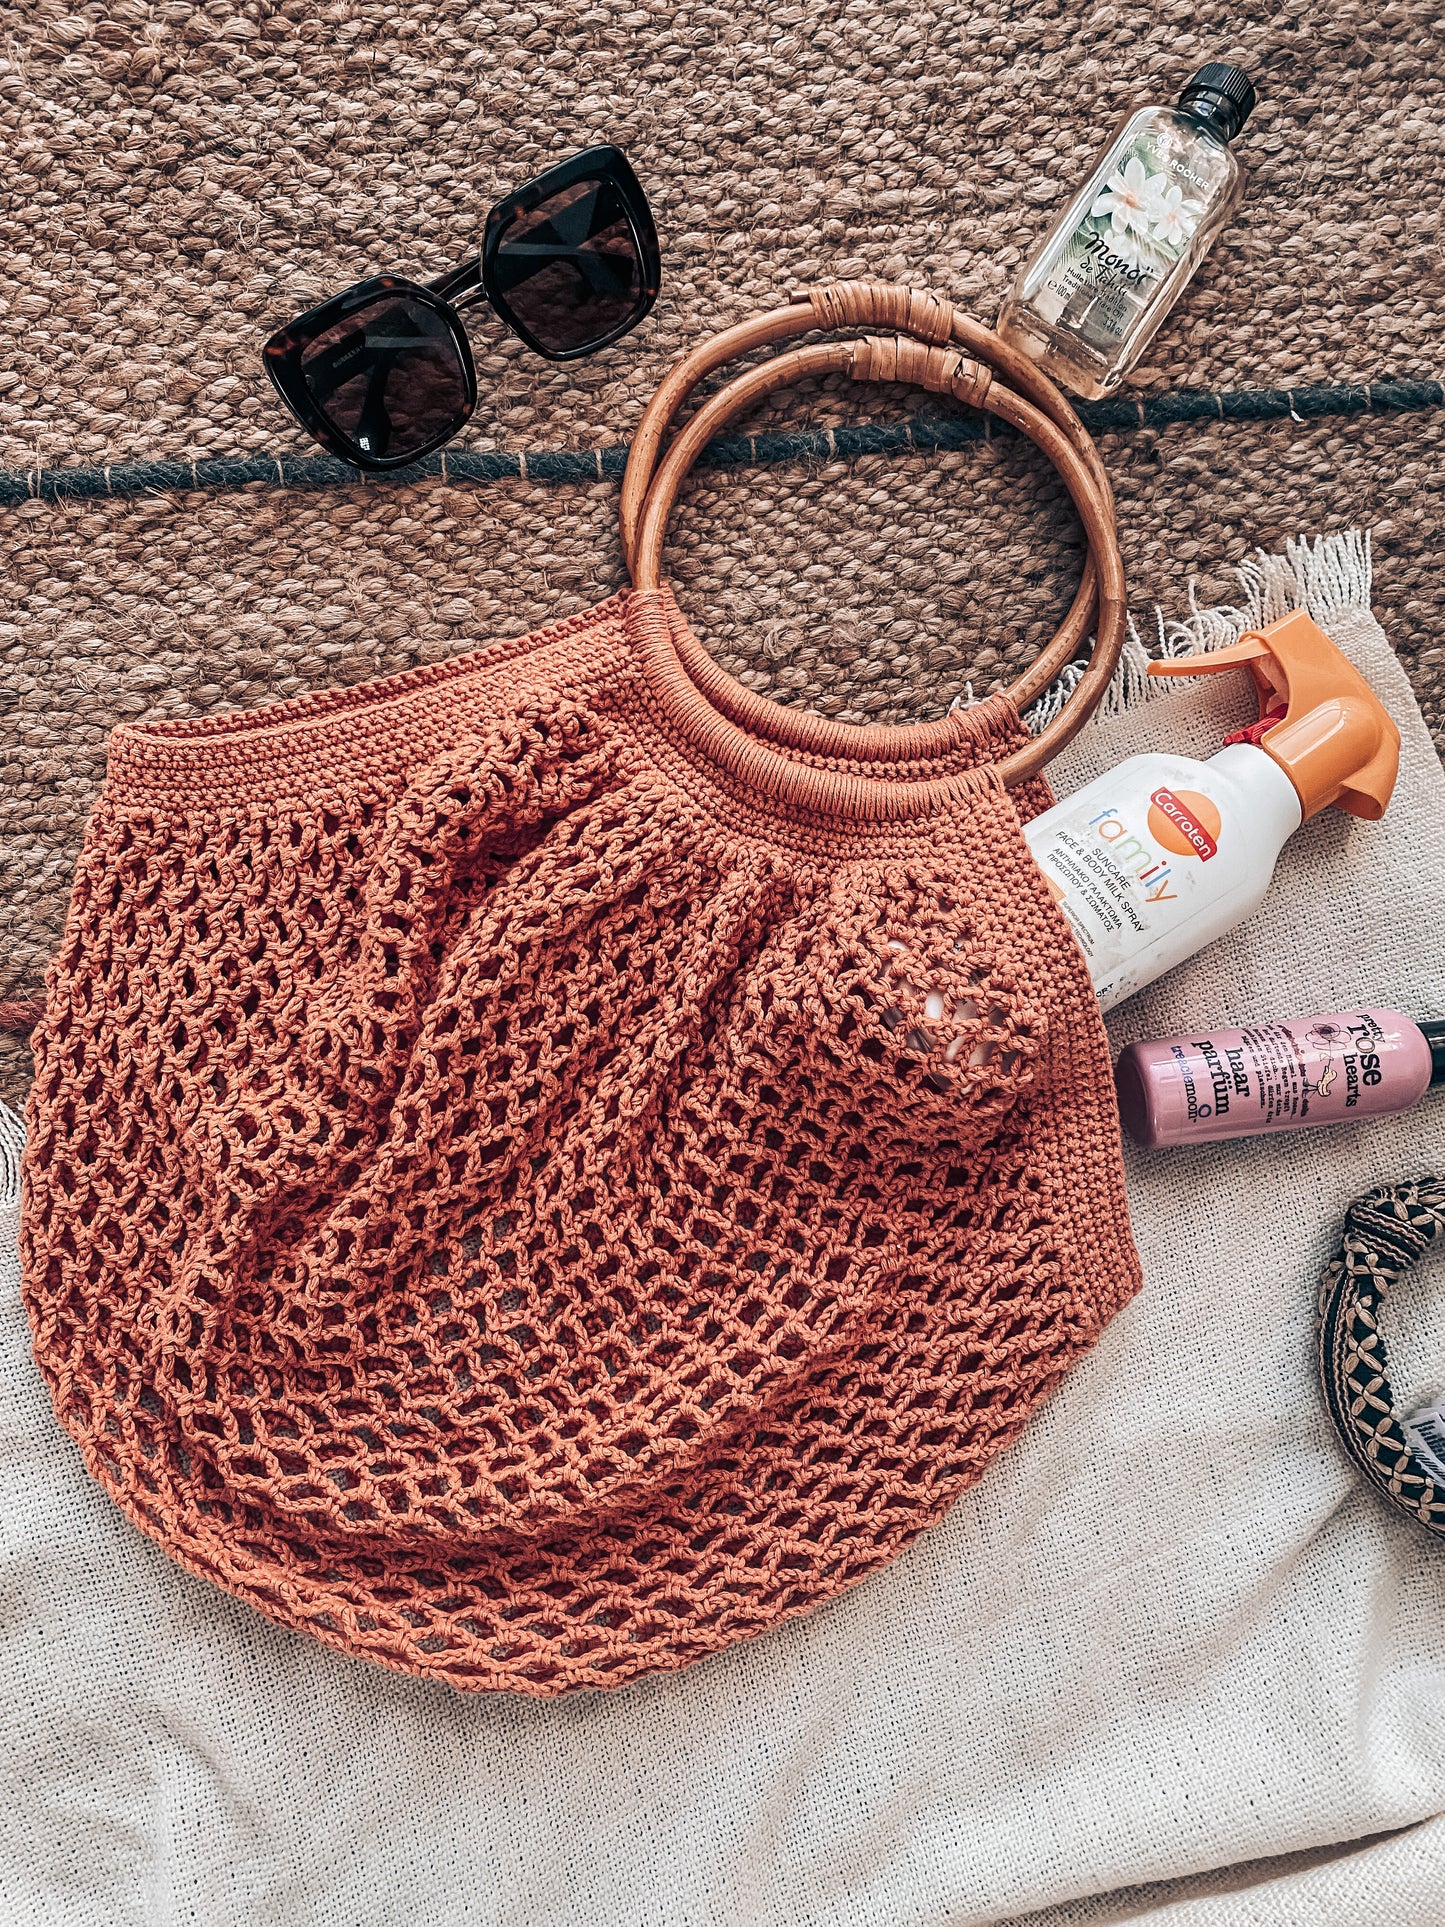 The Caribbean Beach Bag Crochet pattern